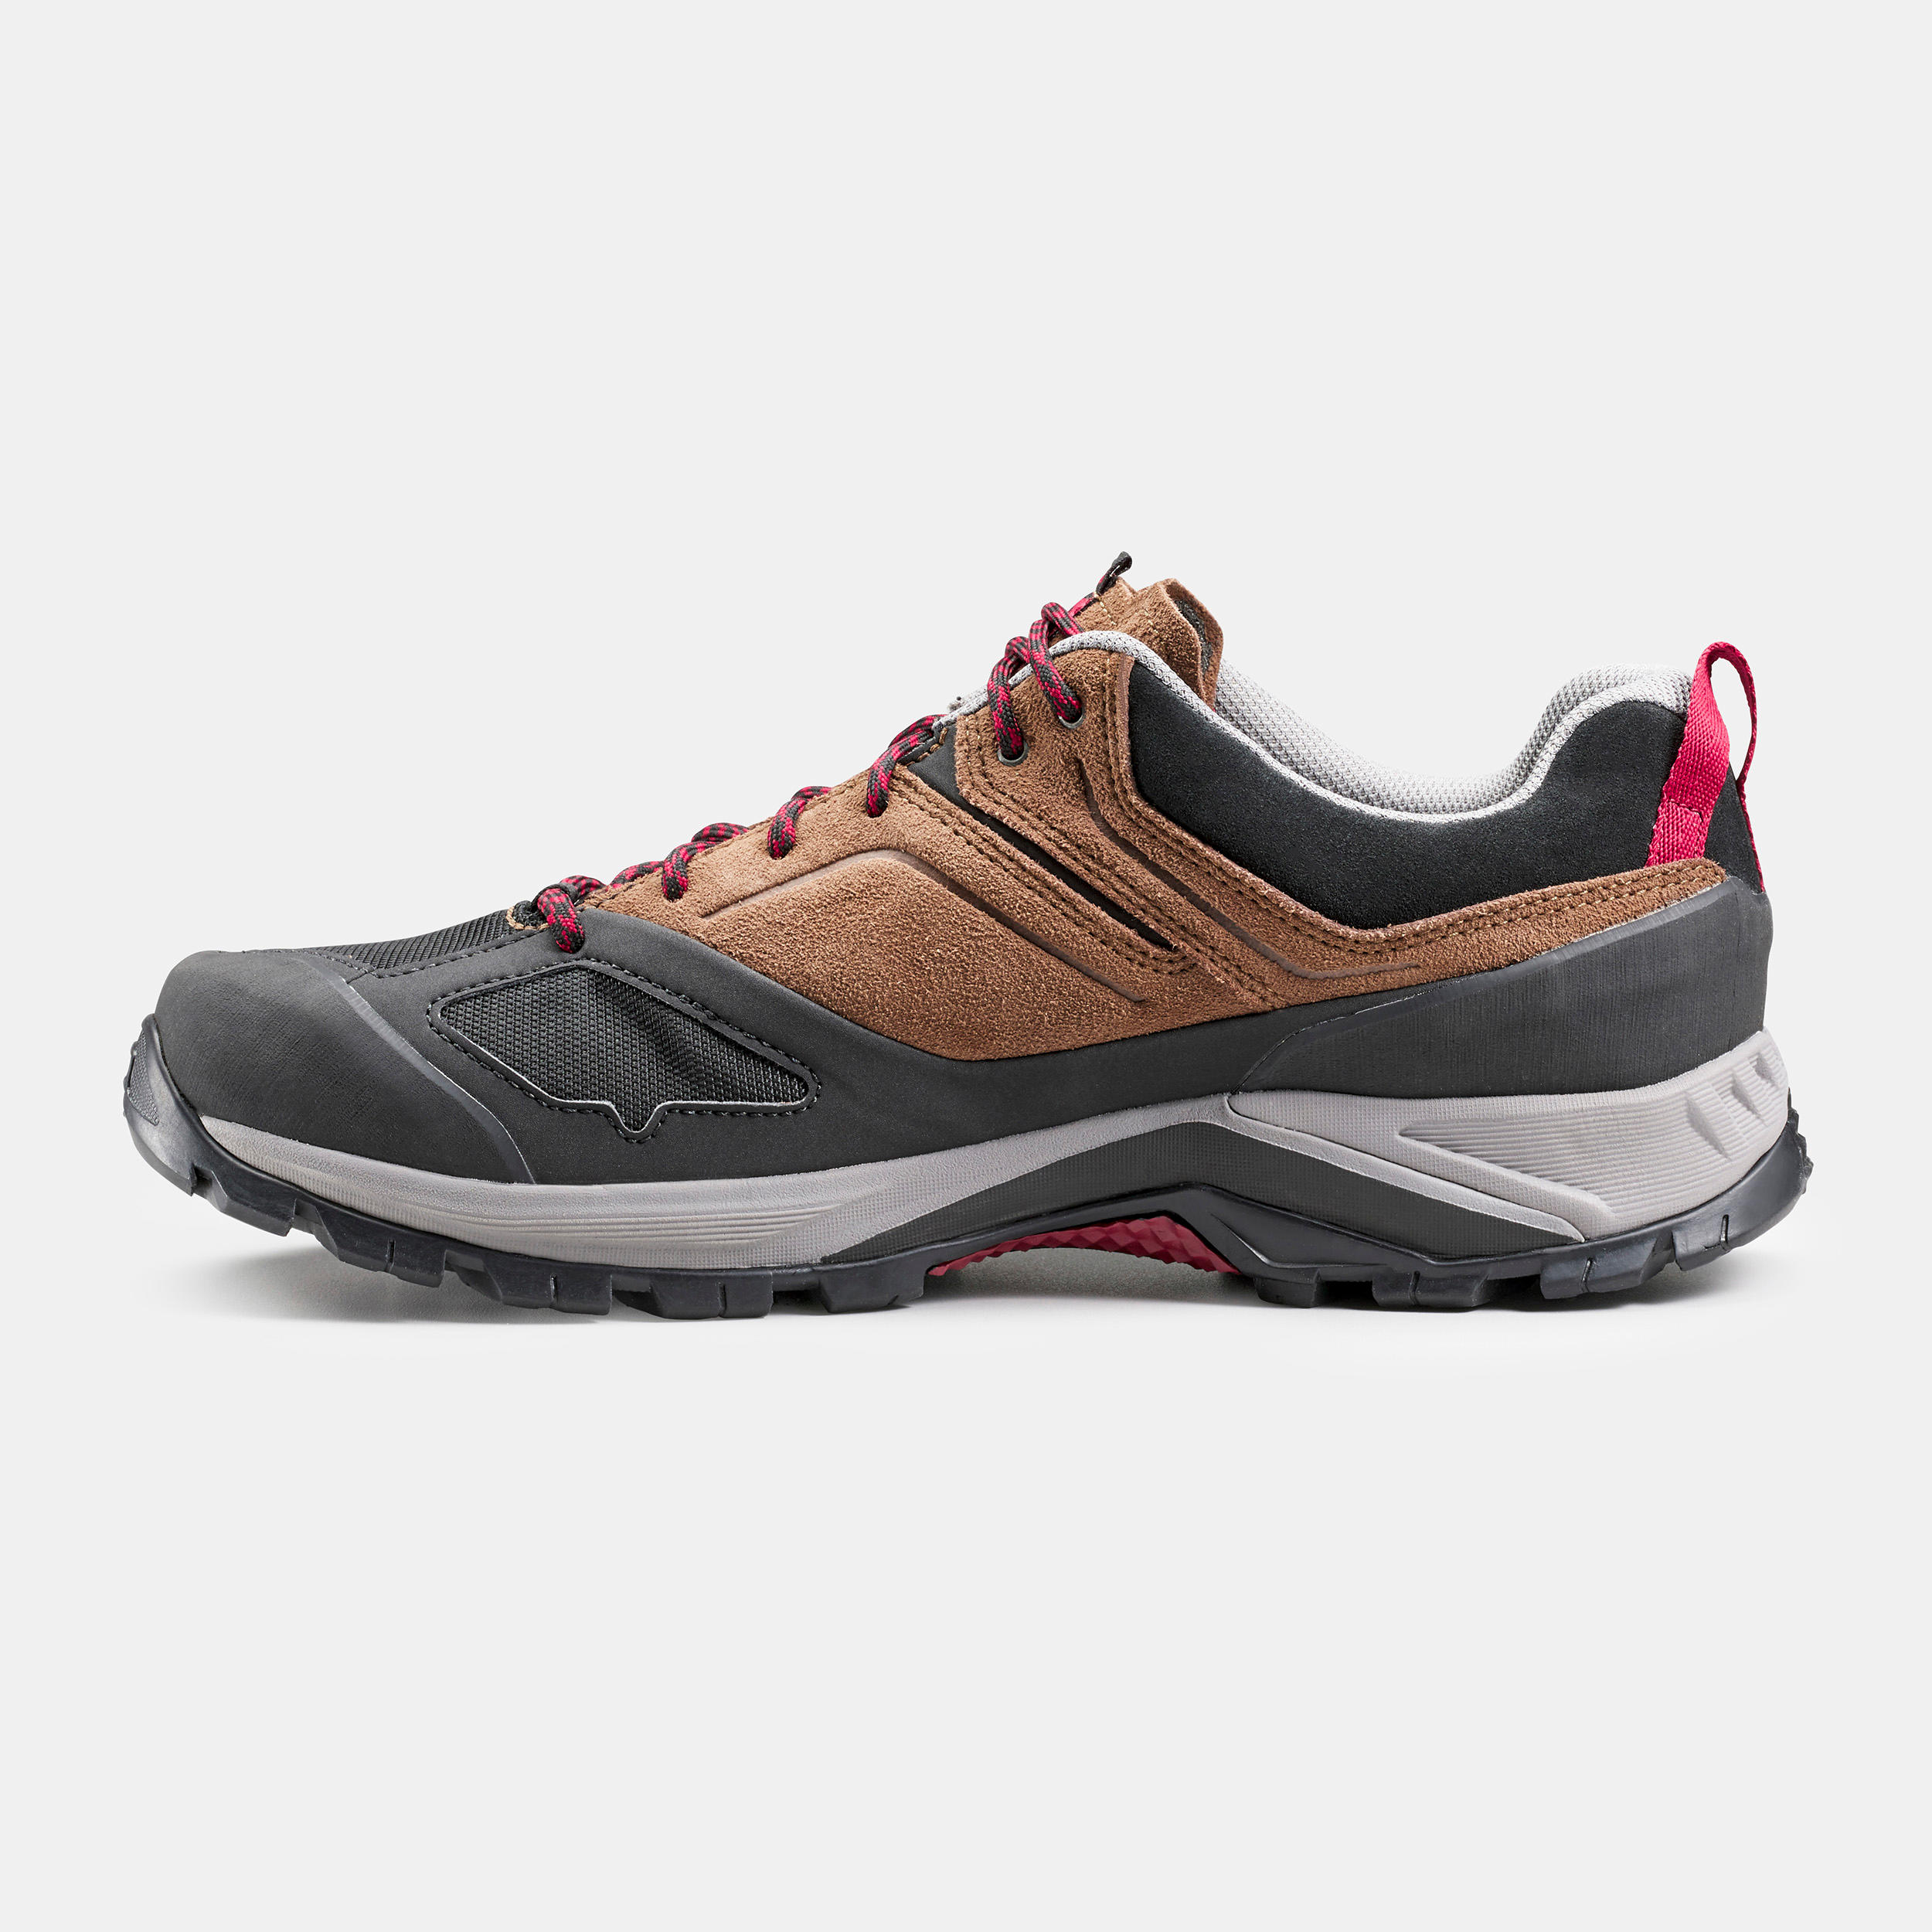 Men's waterproof mountain hiking shoes - MH500 - Brown 4/7